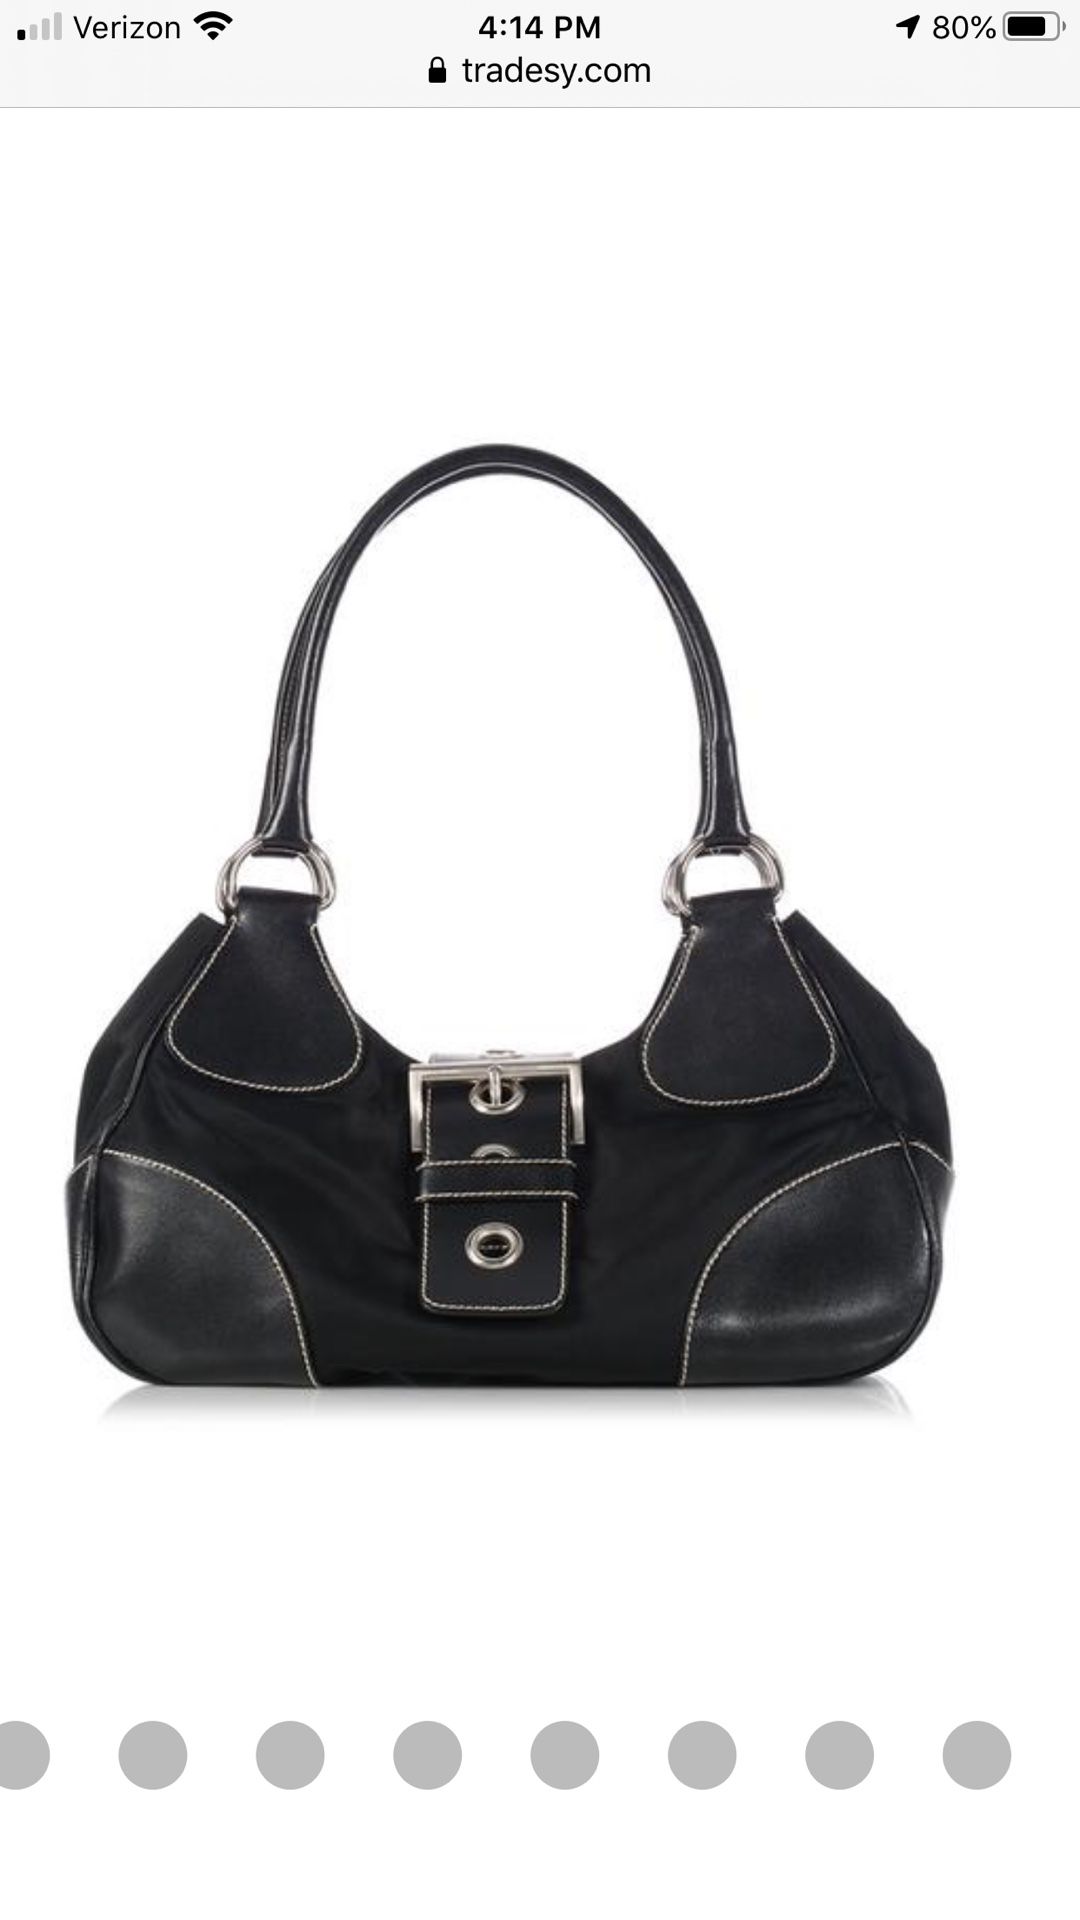 Authentic Prada handbag